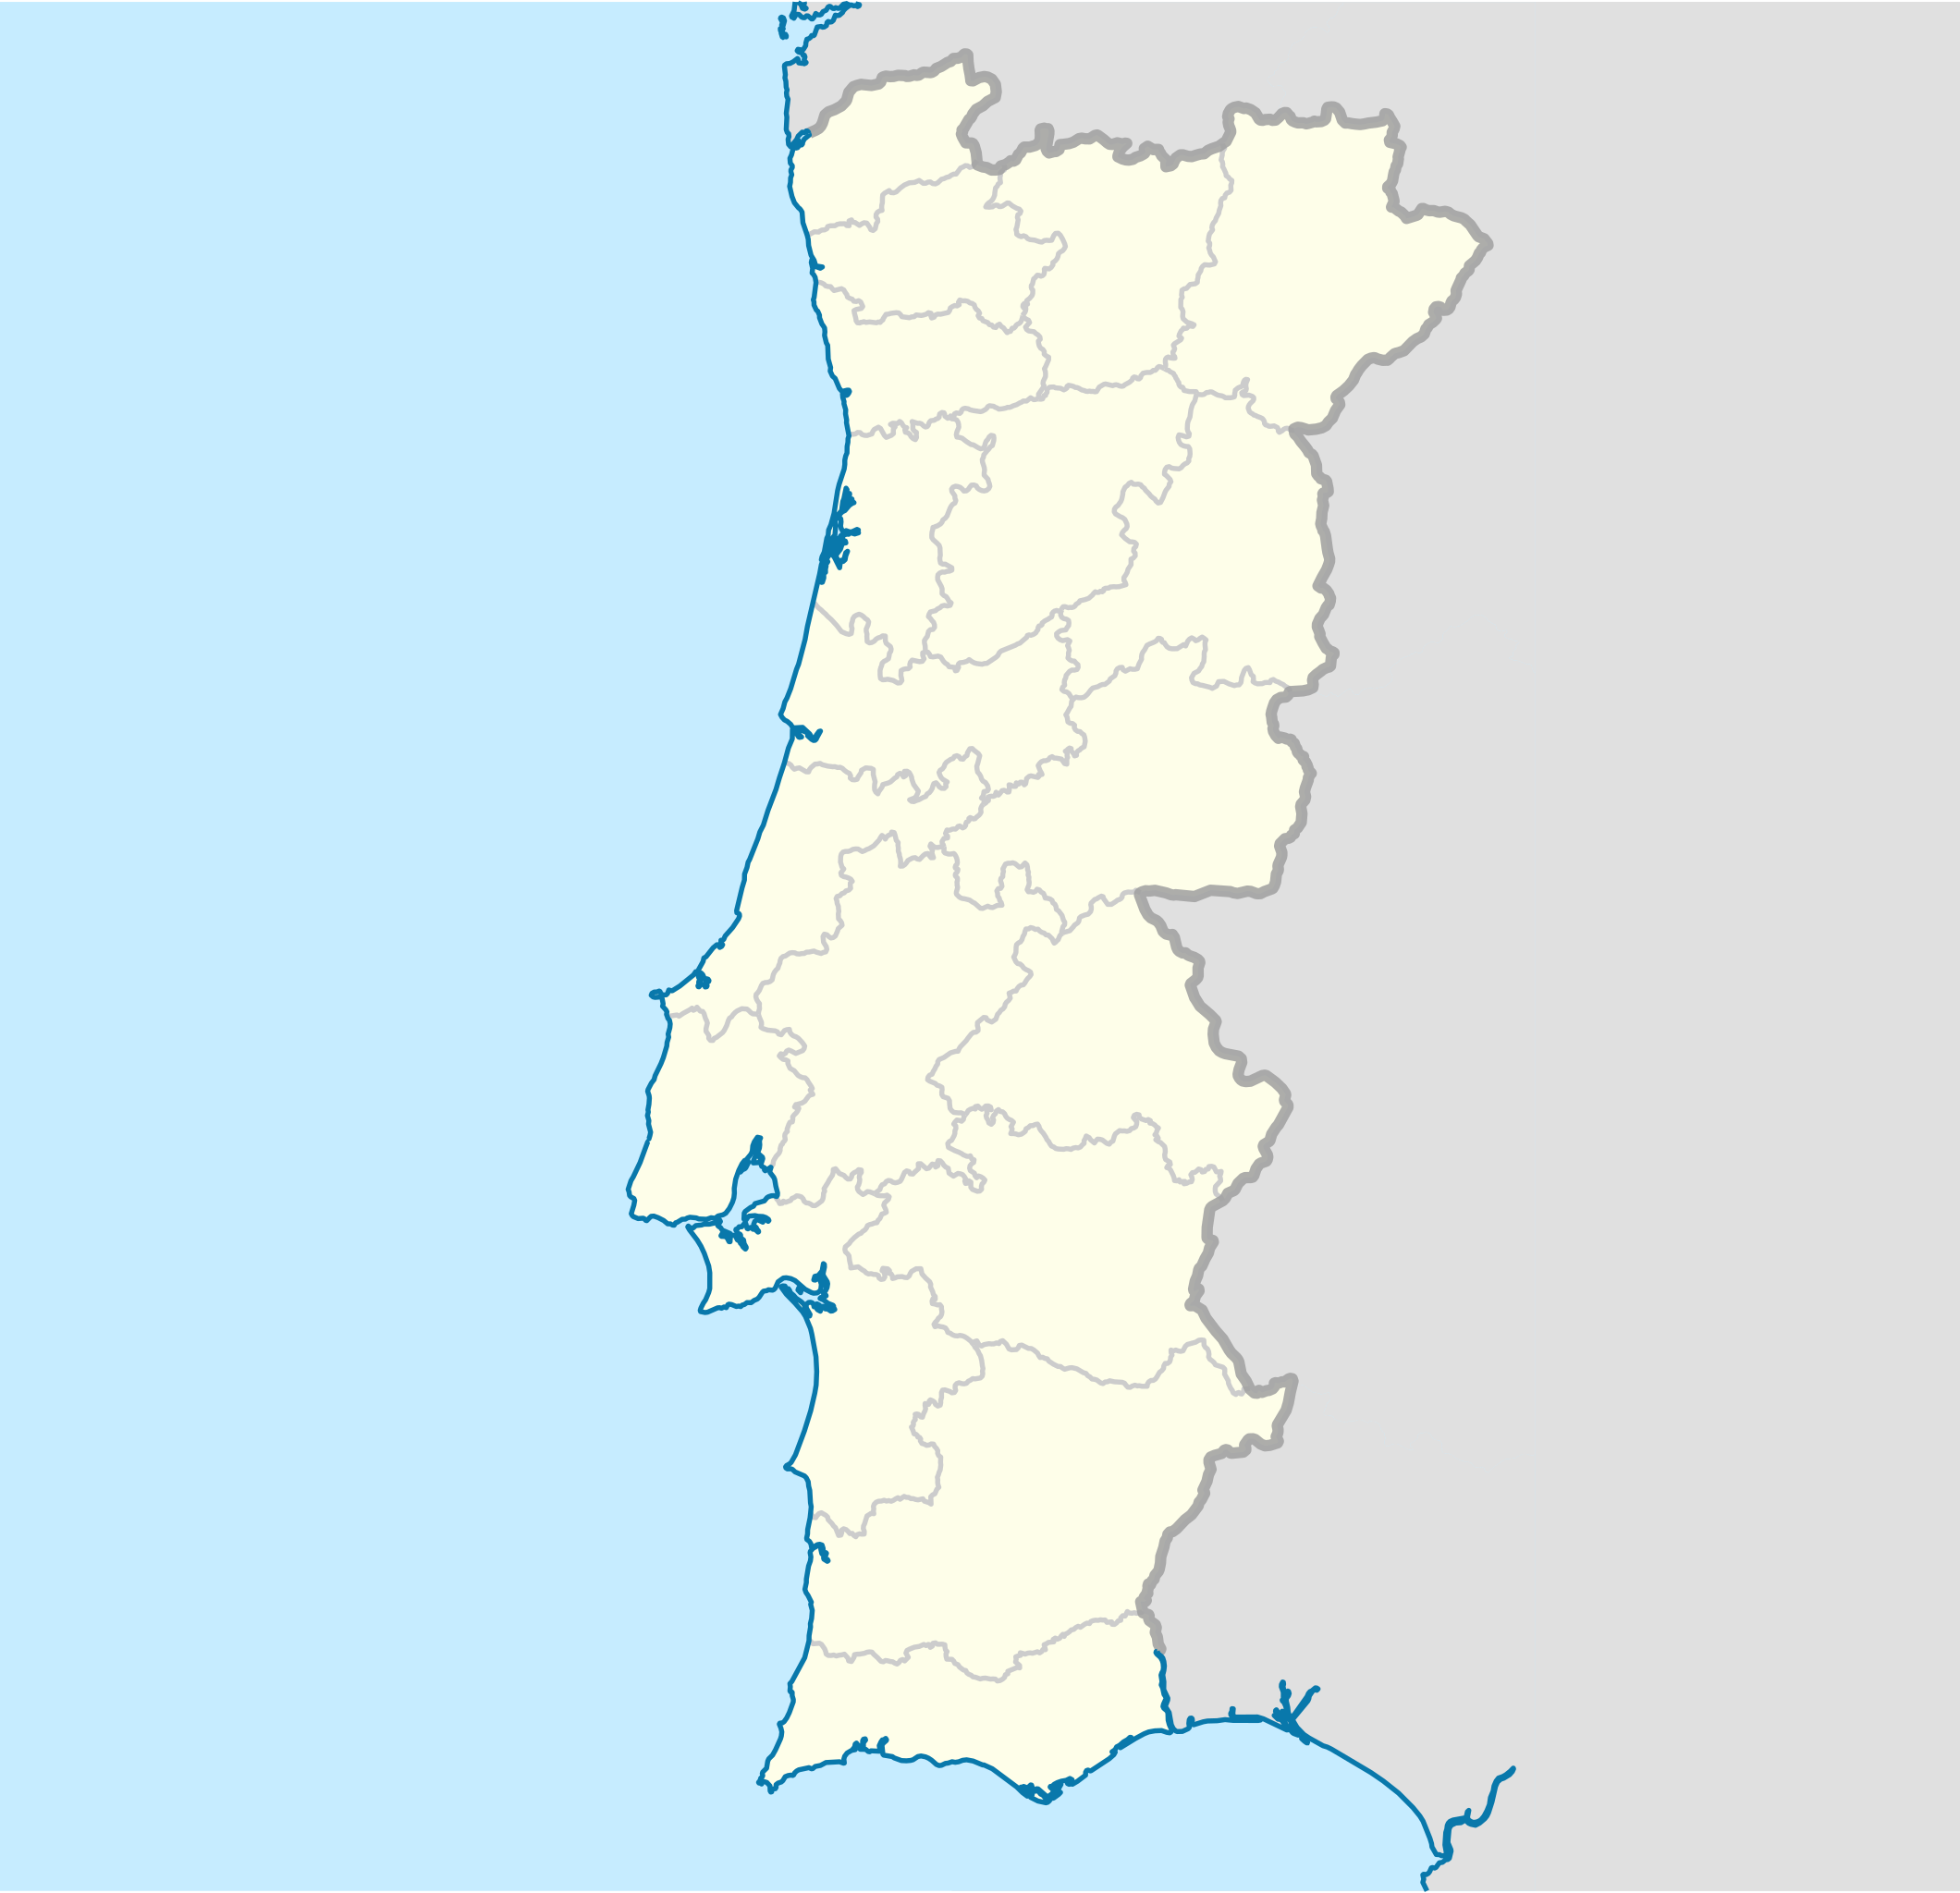 File:Mapa portos maritimos portugal.png - Wikimedia Commons